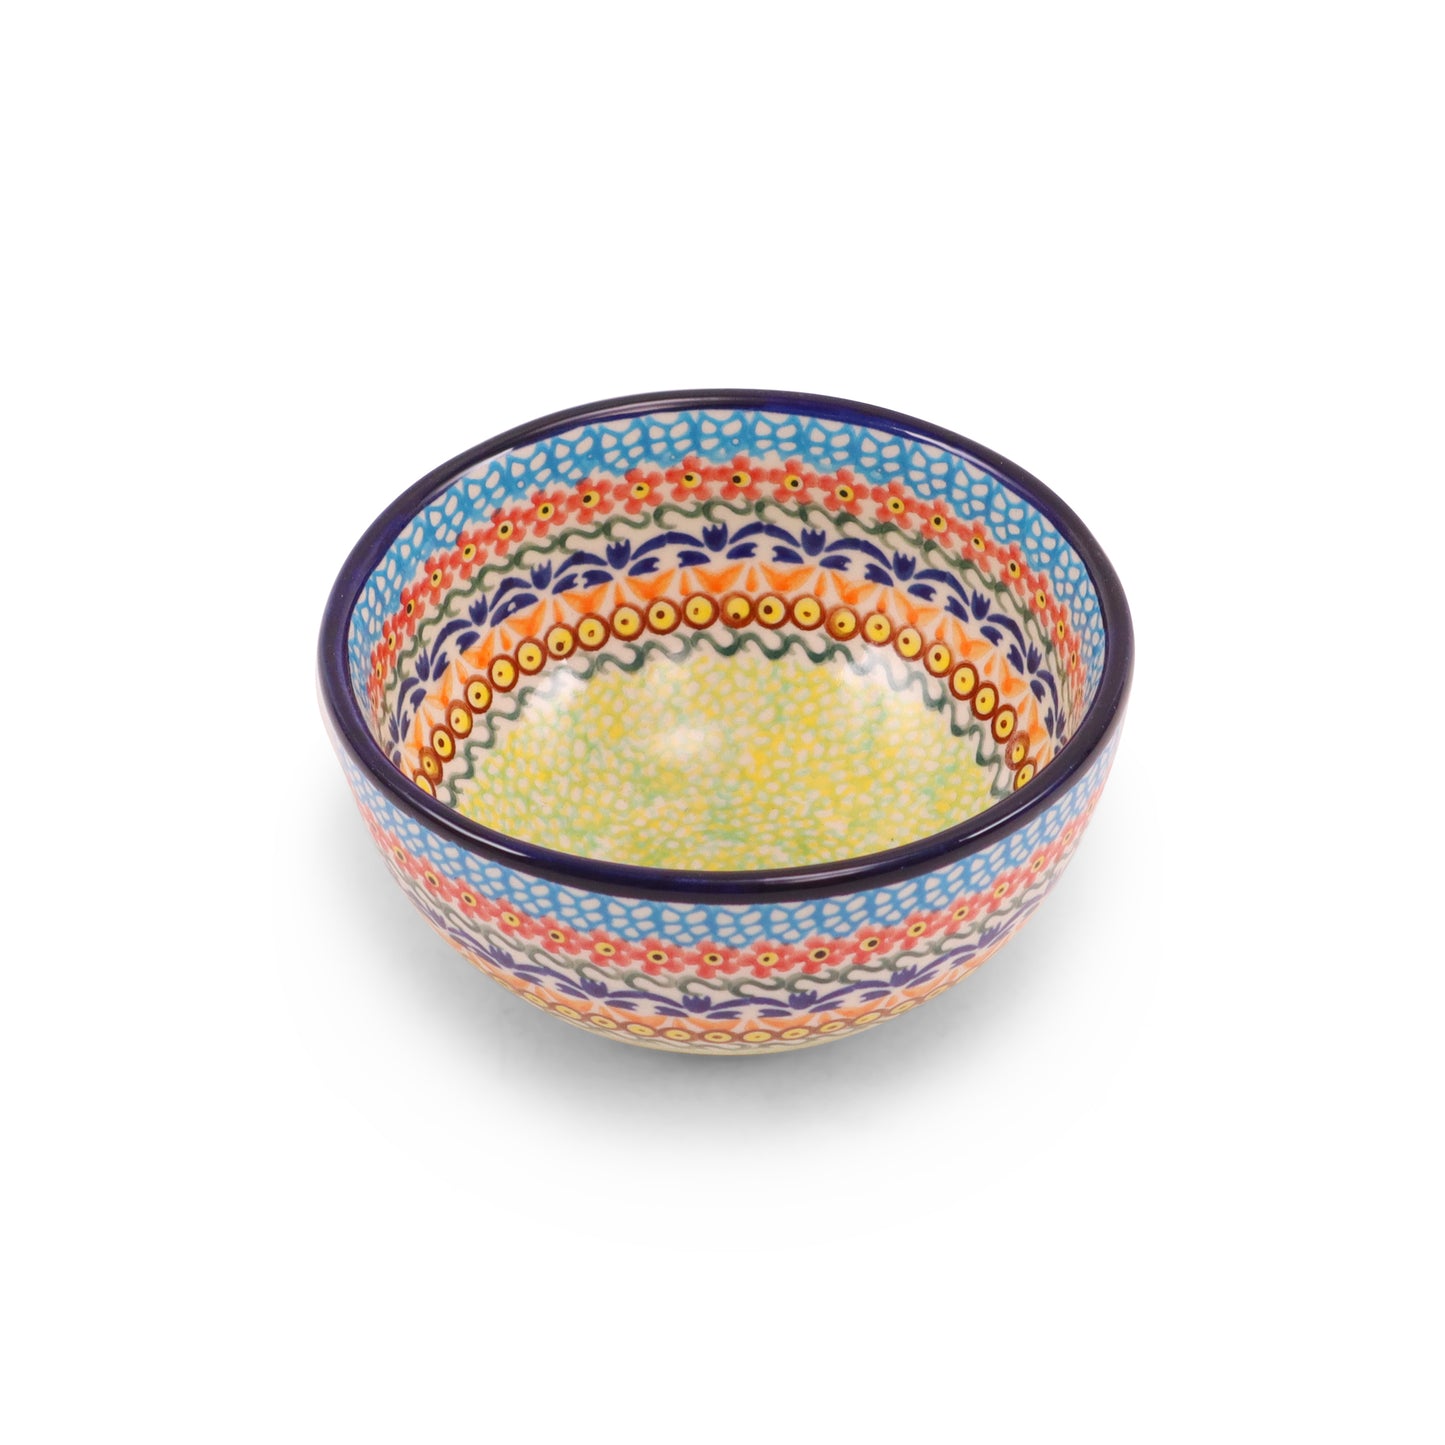 5" Rice Bowl 2Q. Pattern: B56